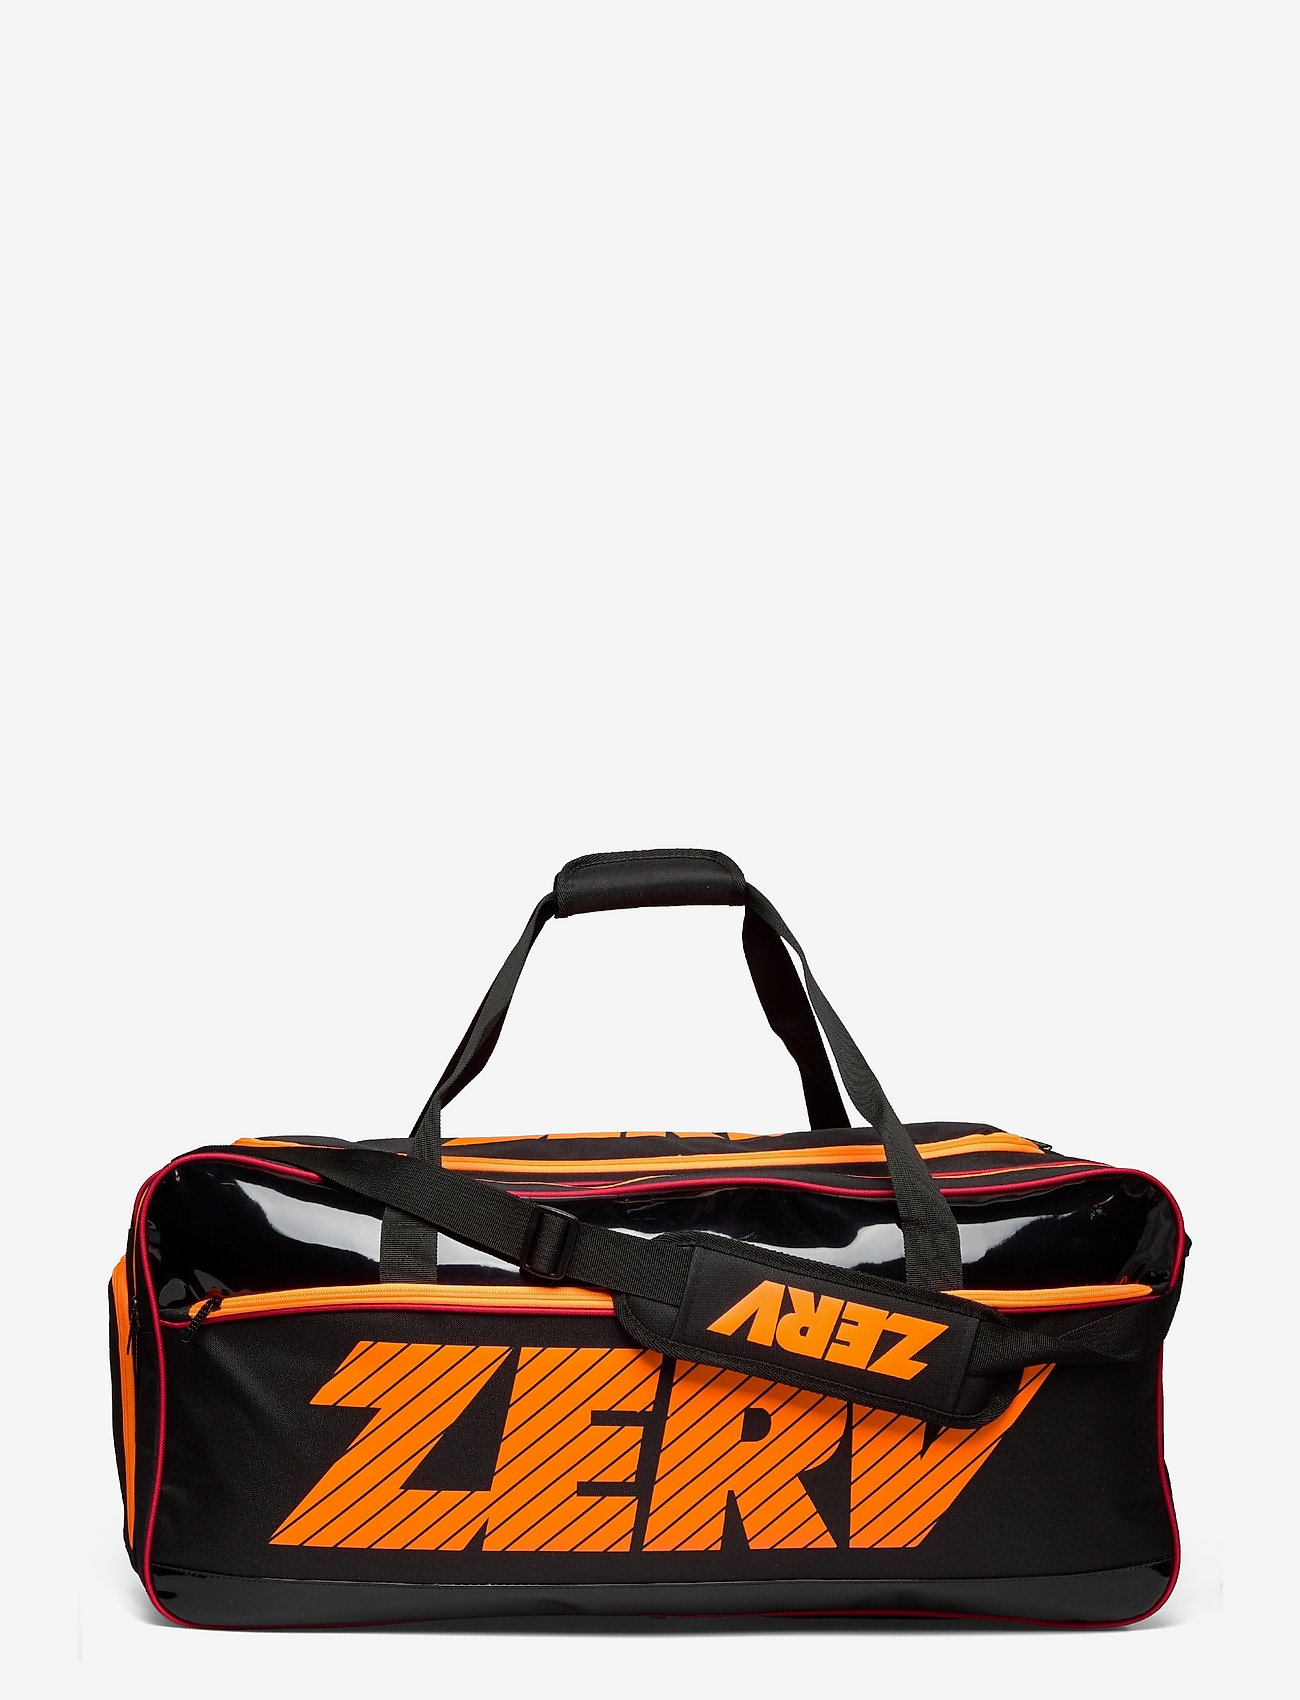 Zerv - ZERV Thunder Square Pro Bag - rakečių sporto krepšiai - black/orange - 0